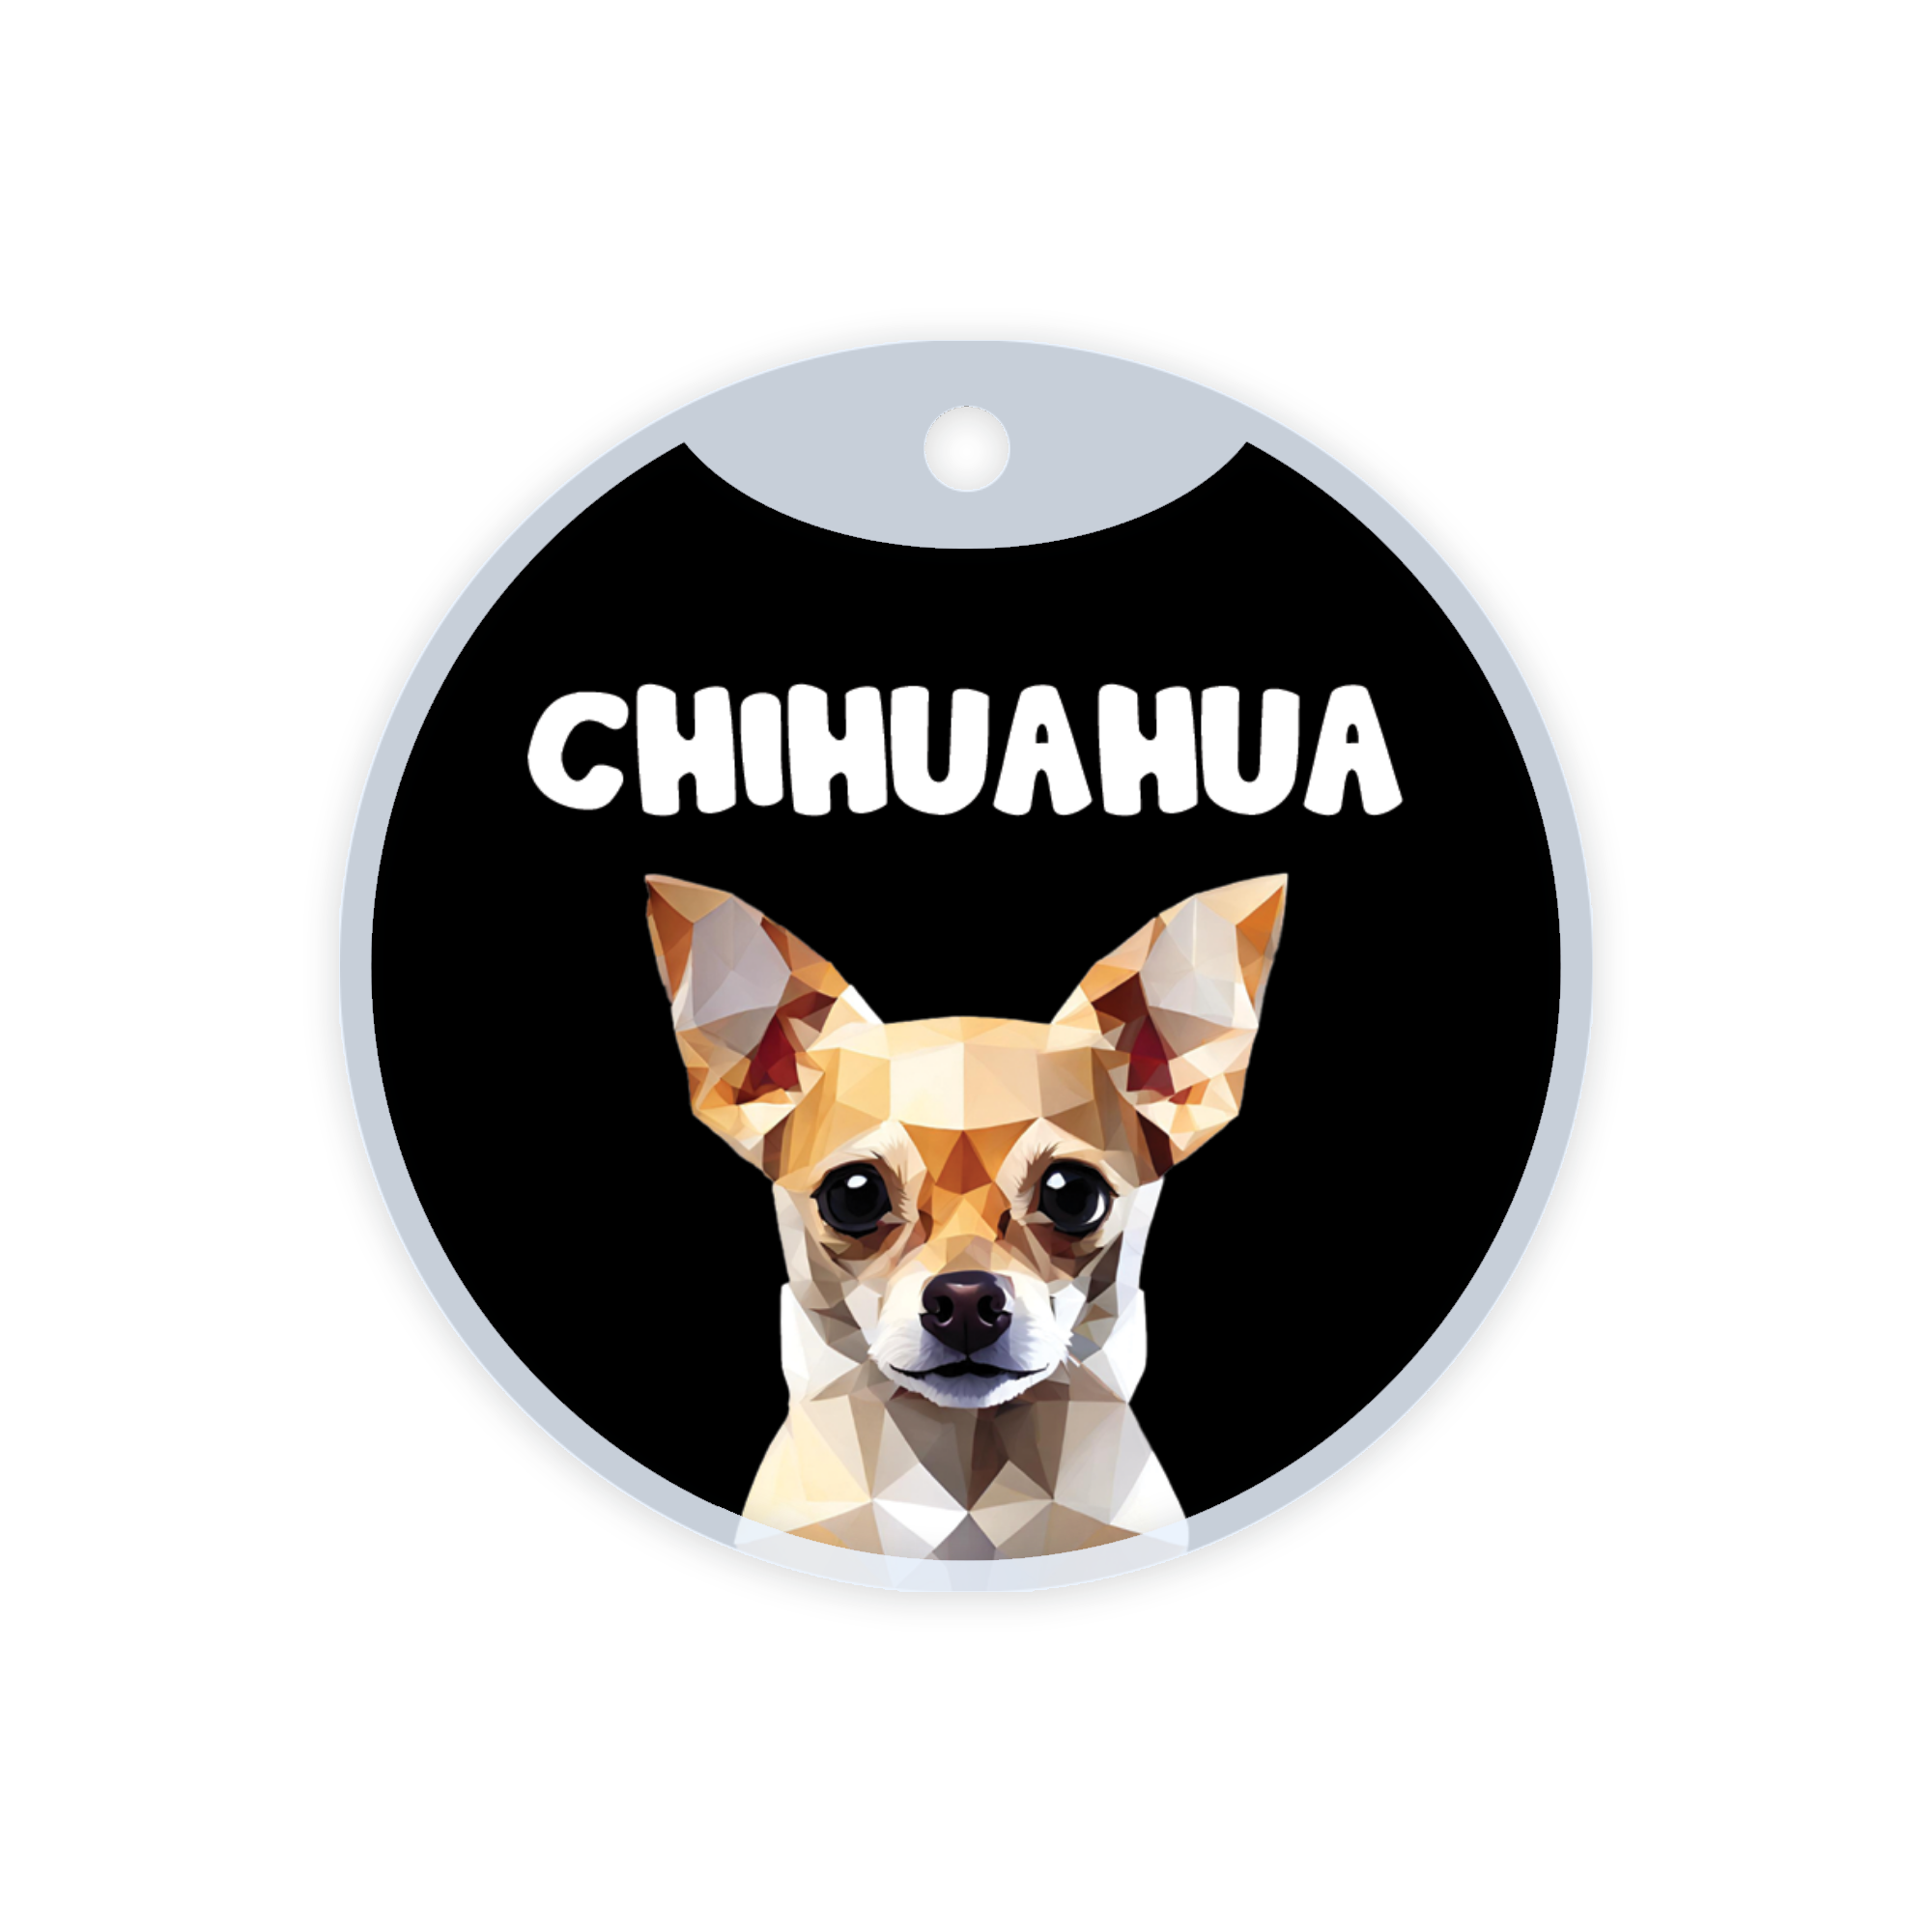 Customized Dog Id Tags - Chihuahua